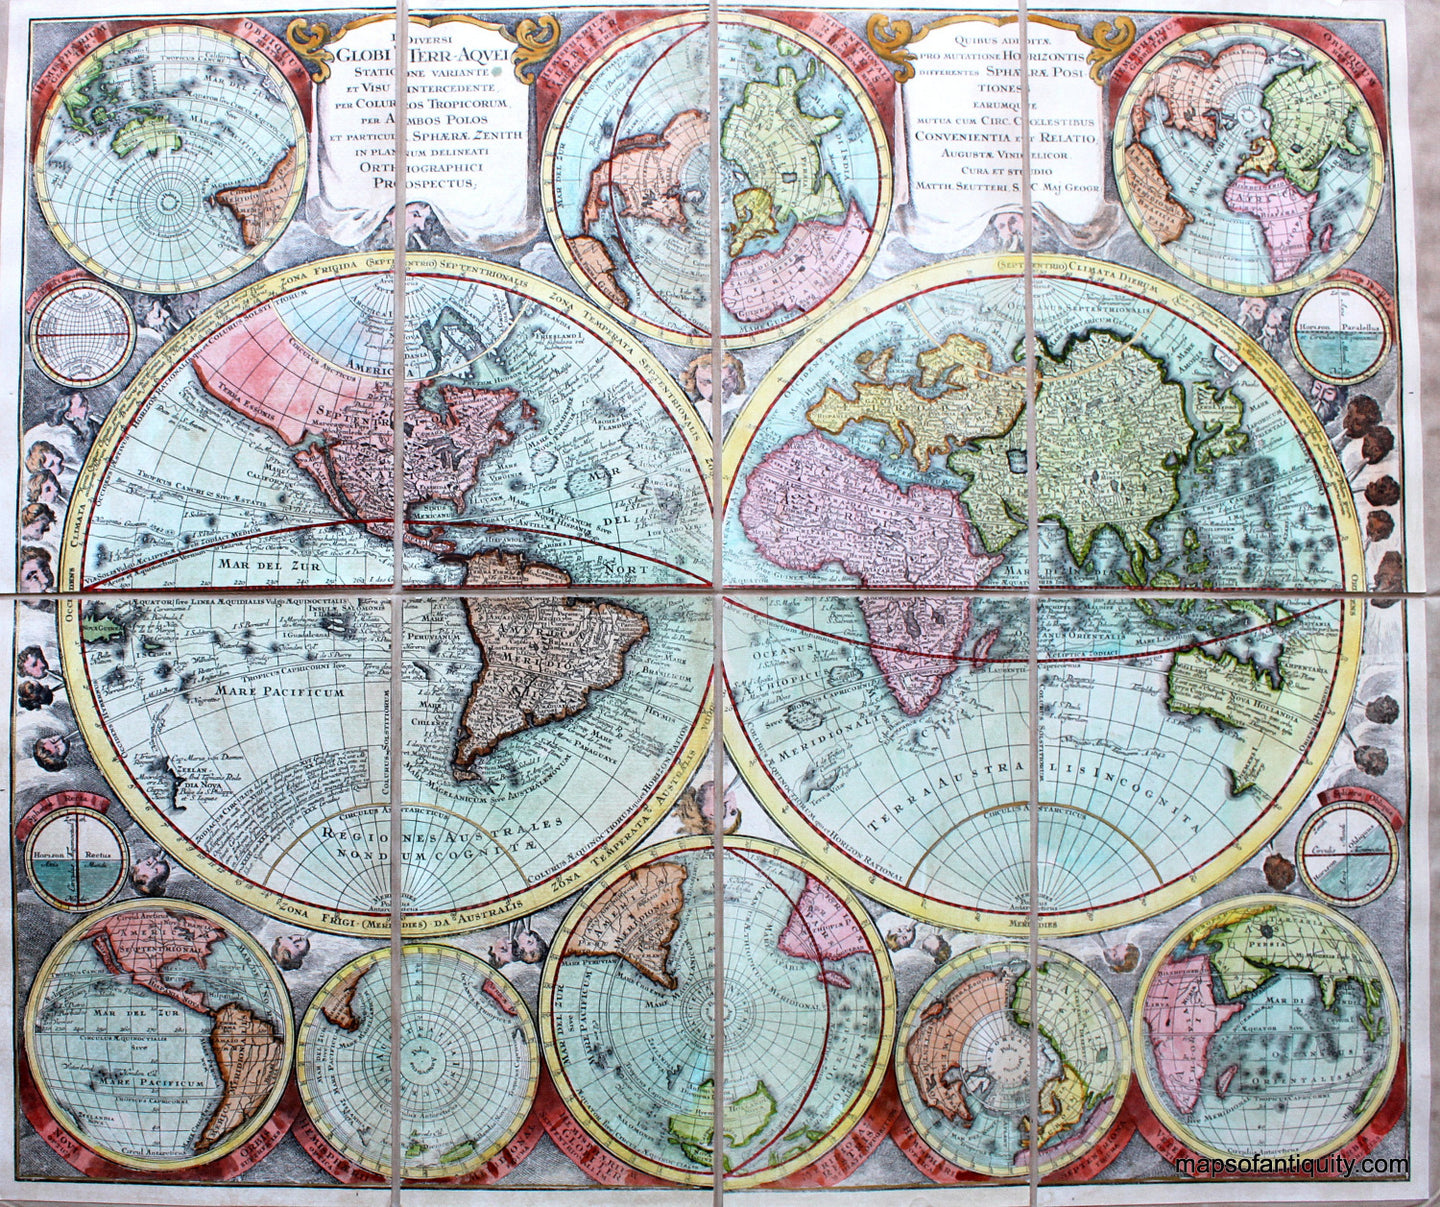 Reproduction-Diversi-Globi-Terre---Aquei-World-Map-Hand-colored-Reproduction********-Reproduction-World--Reproduction-Maps-Of-Antiquity